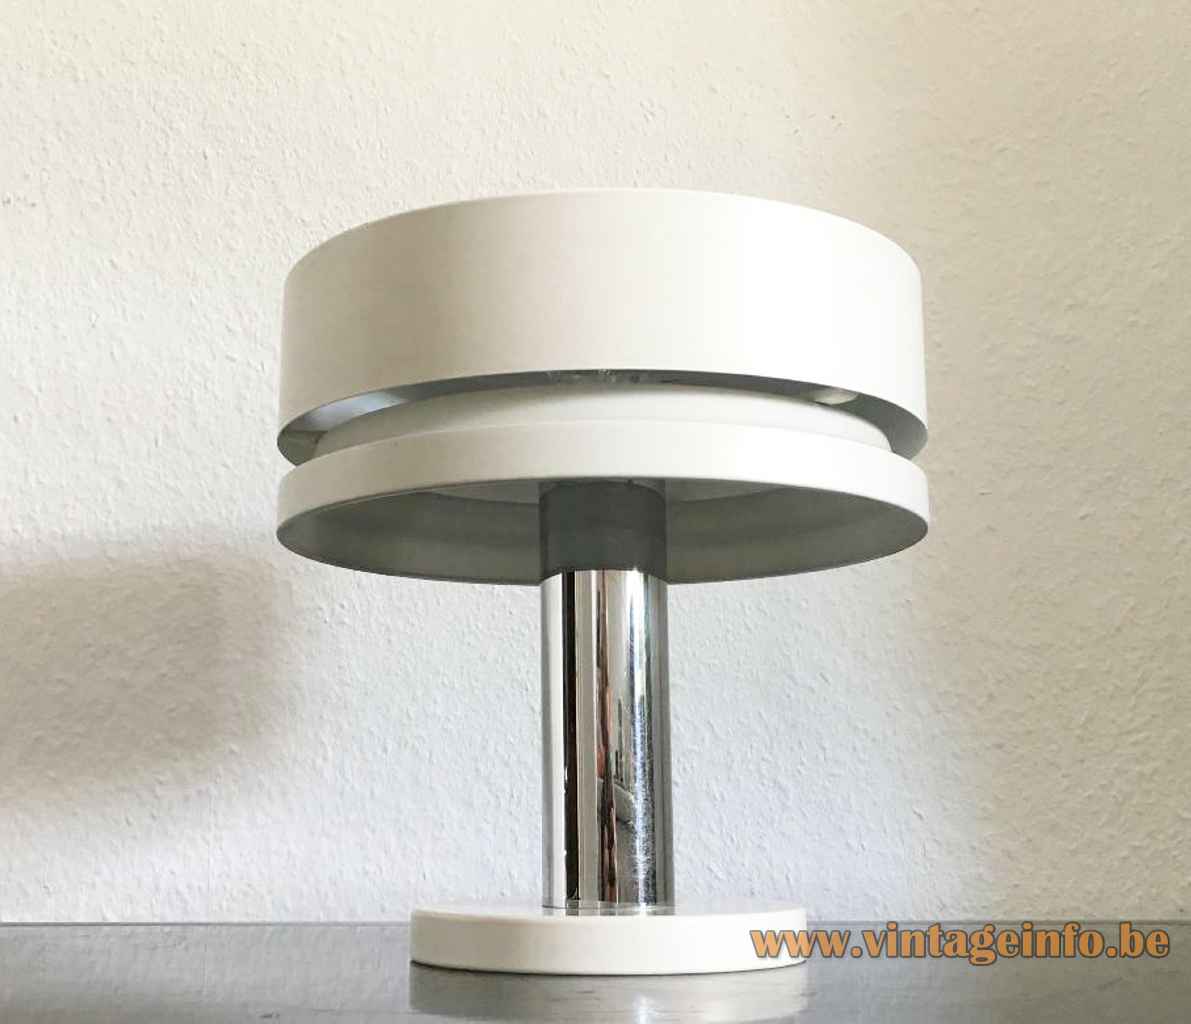 Kaiser Leuchten table lamp 10 round white metal base chrome rod round aluminium lampshade 1970s Germany